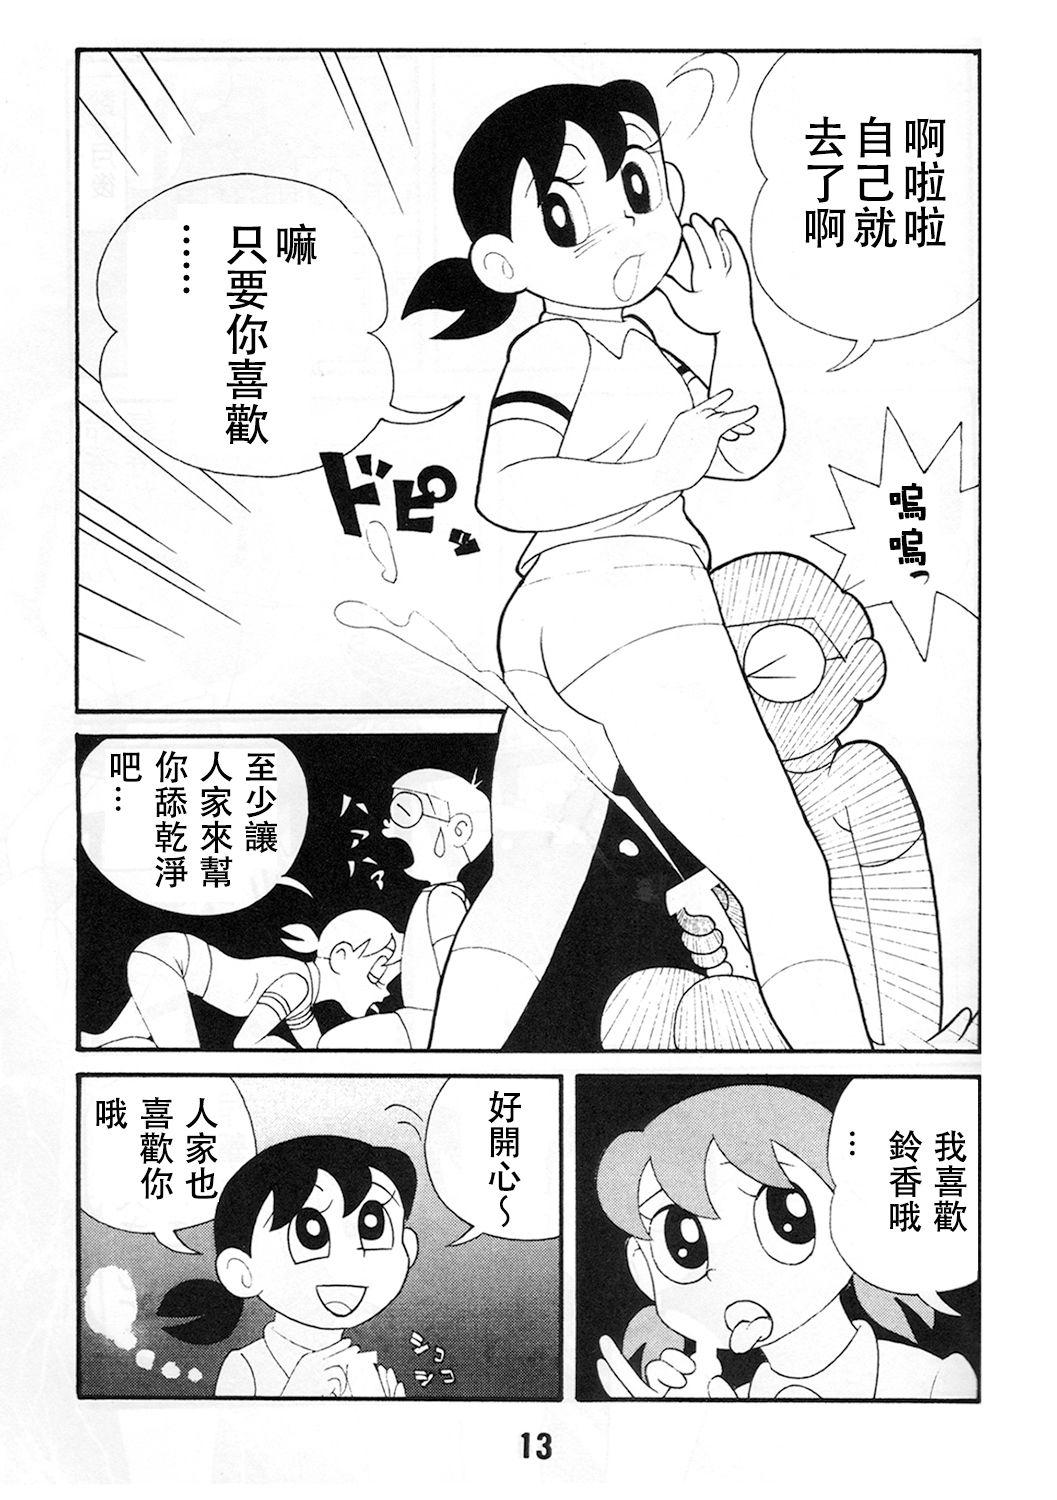 Best Blowjob Ever TWIN TAIL Vol.18 Joshi Ana - Doraemon Esper mami Follando - Page 13